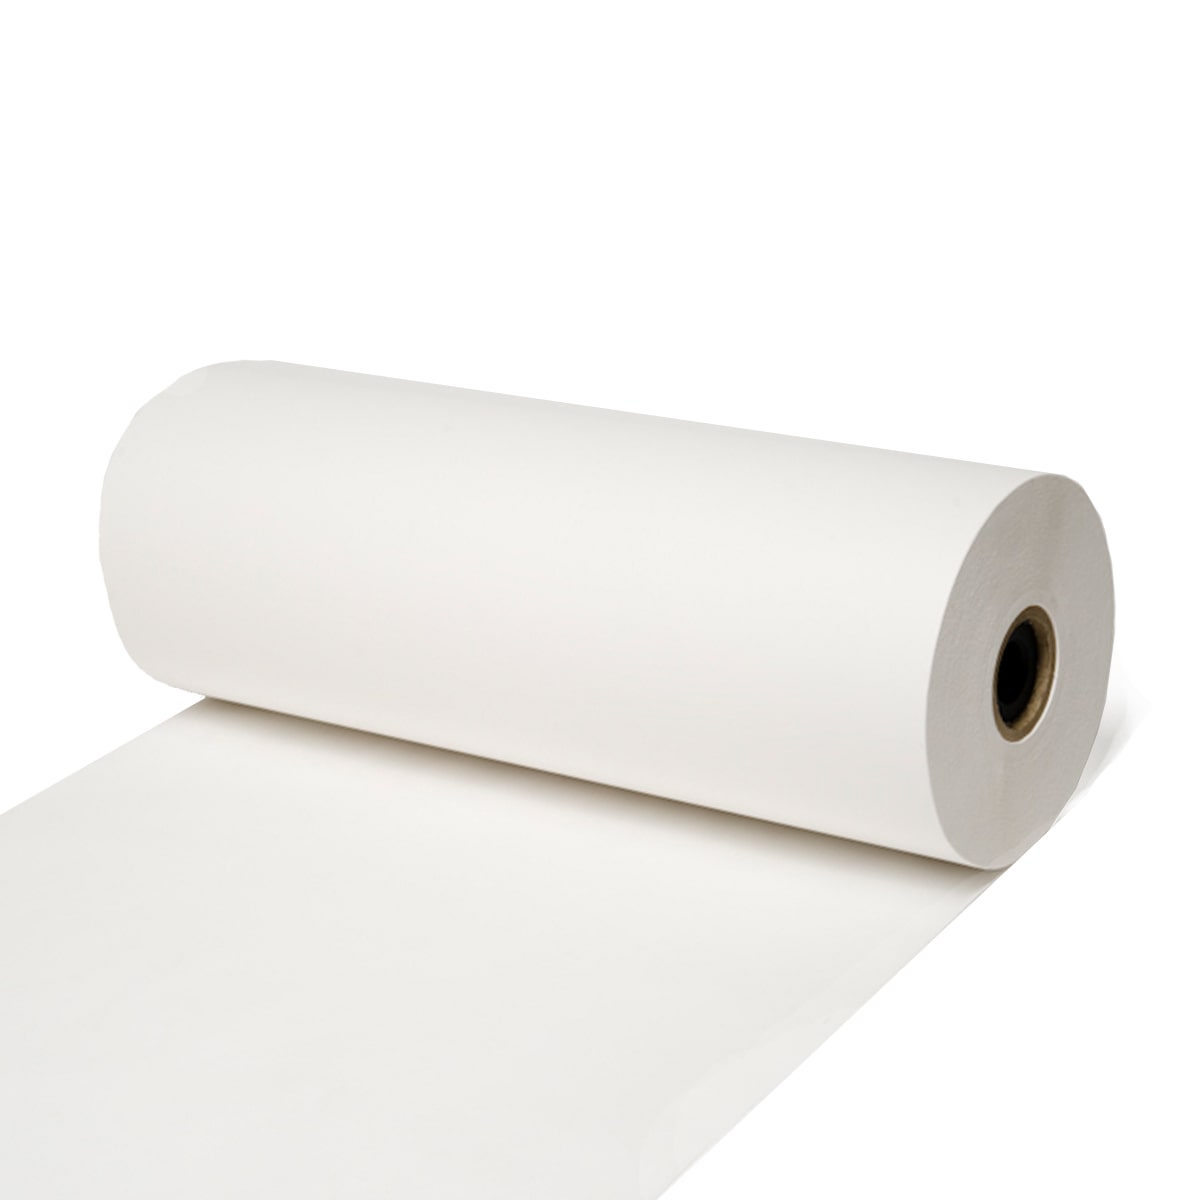 Seidenpapier Weiss, 50 / 75 cm breit, ca. 450 Meter / Rolle